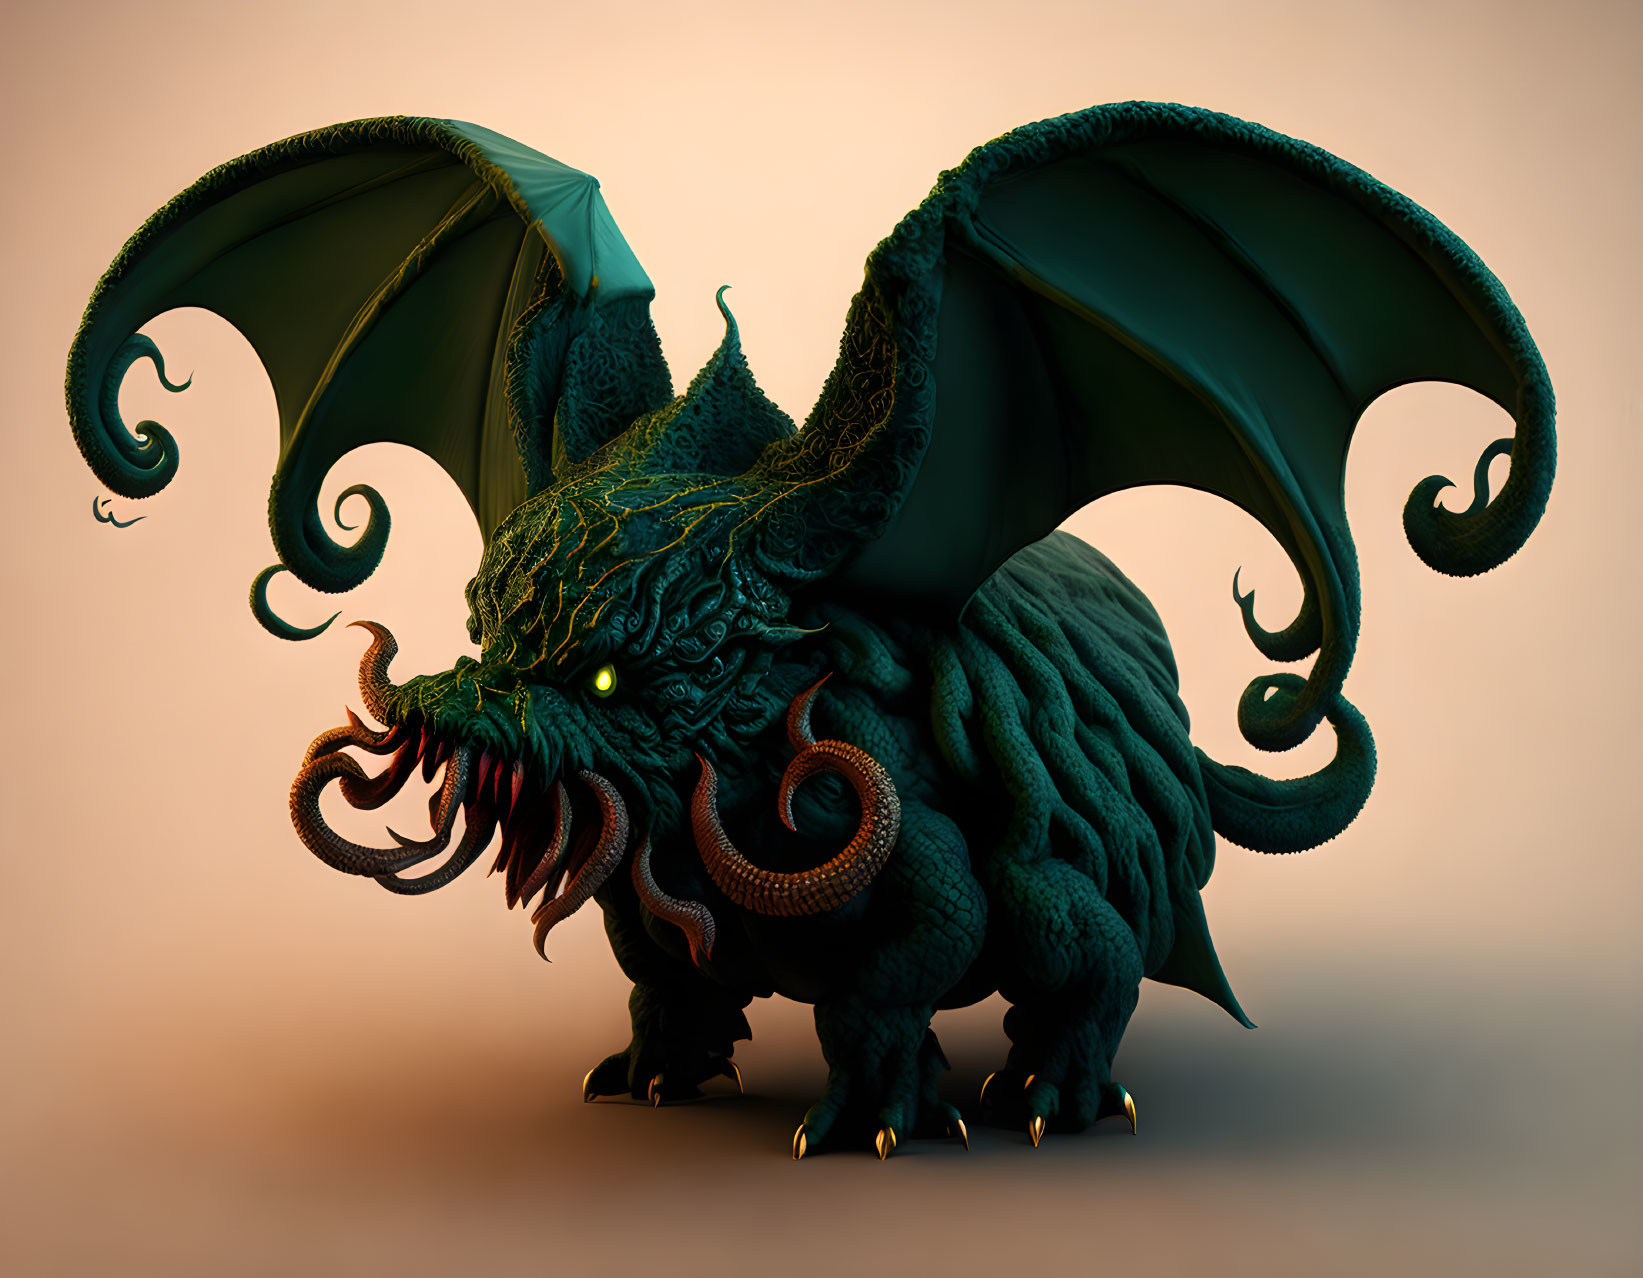 Detailed Digital Illustration of Mythical Green Dragon